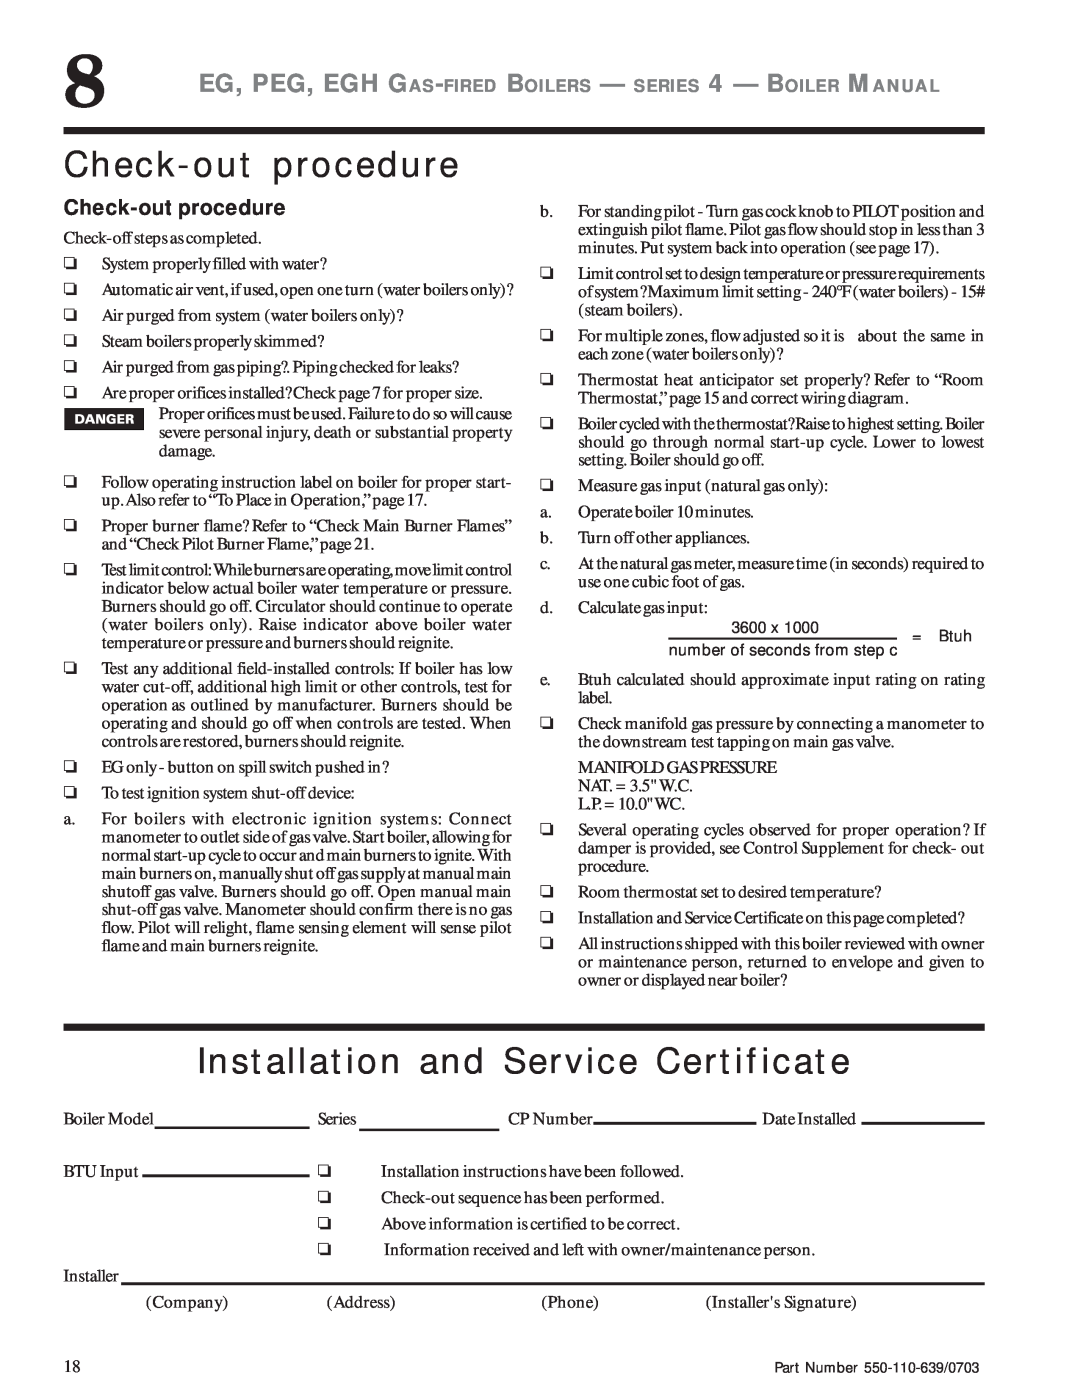 Weil-McLain EG manual Check-outprocedure, Installation and Service Certificate 